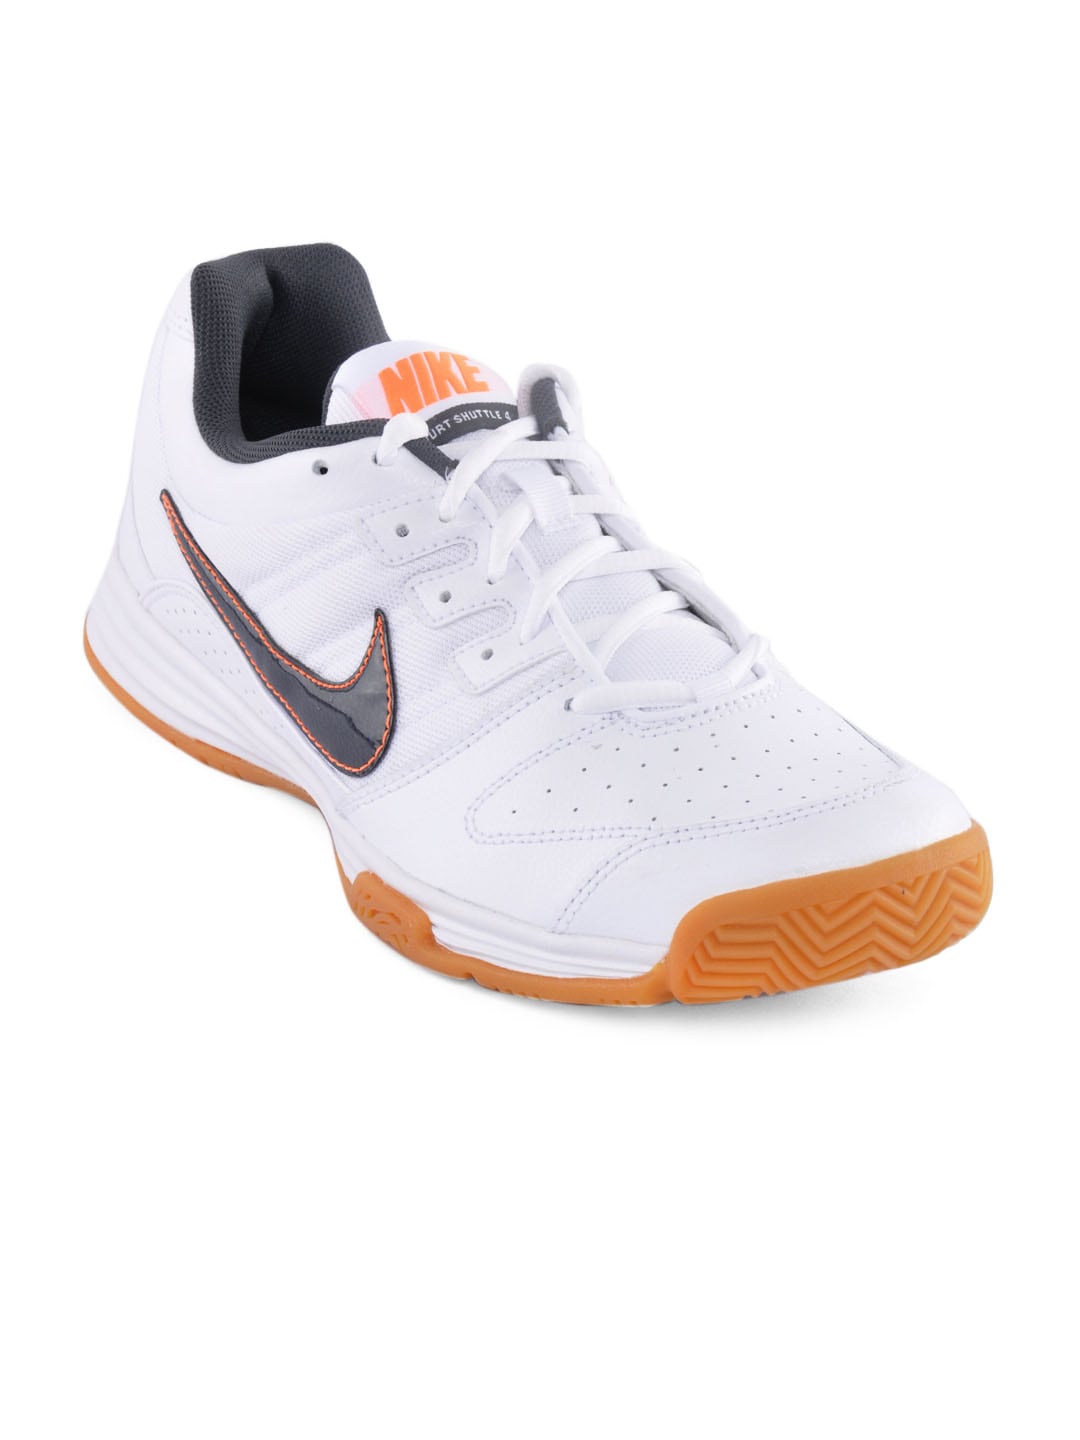 Nike Men White Court Shuttle Shoes